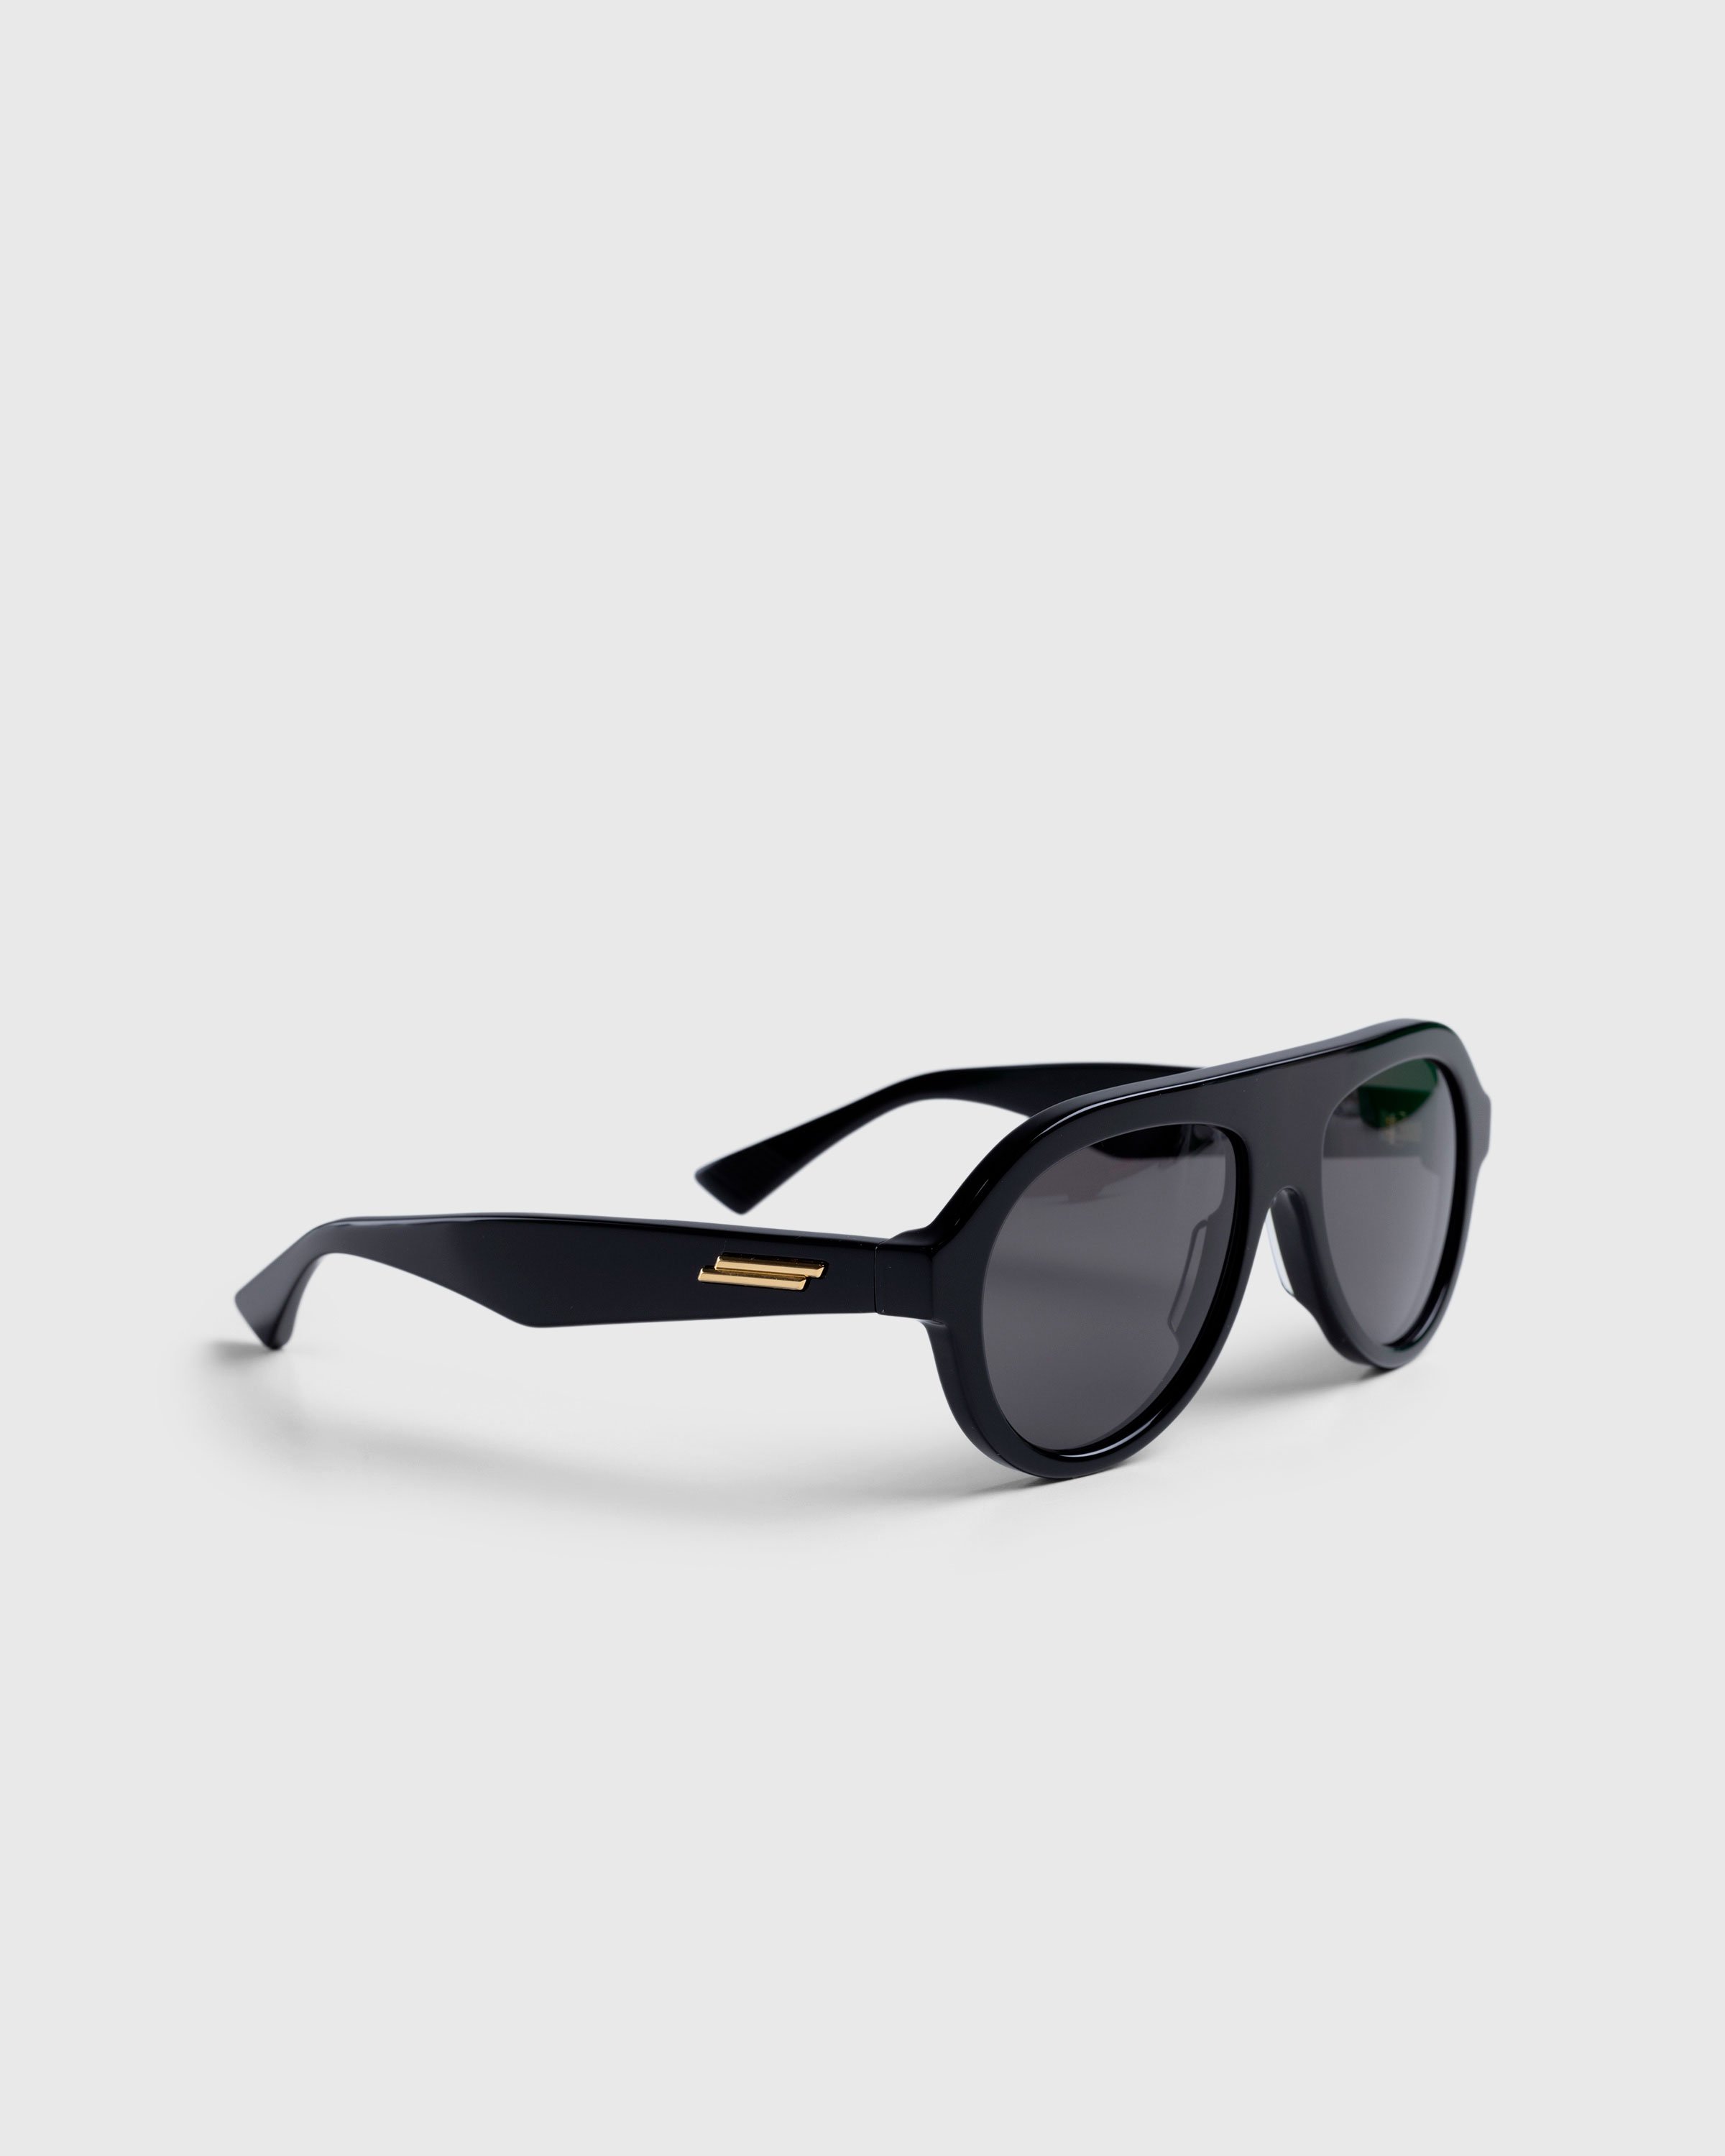 Bottega Veneta - Classic Aviator Sunglasses Black/Grey - Accessories - Black - Image 2